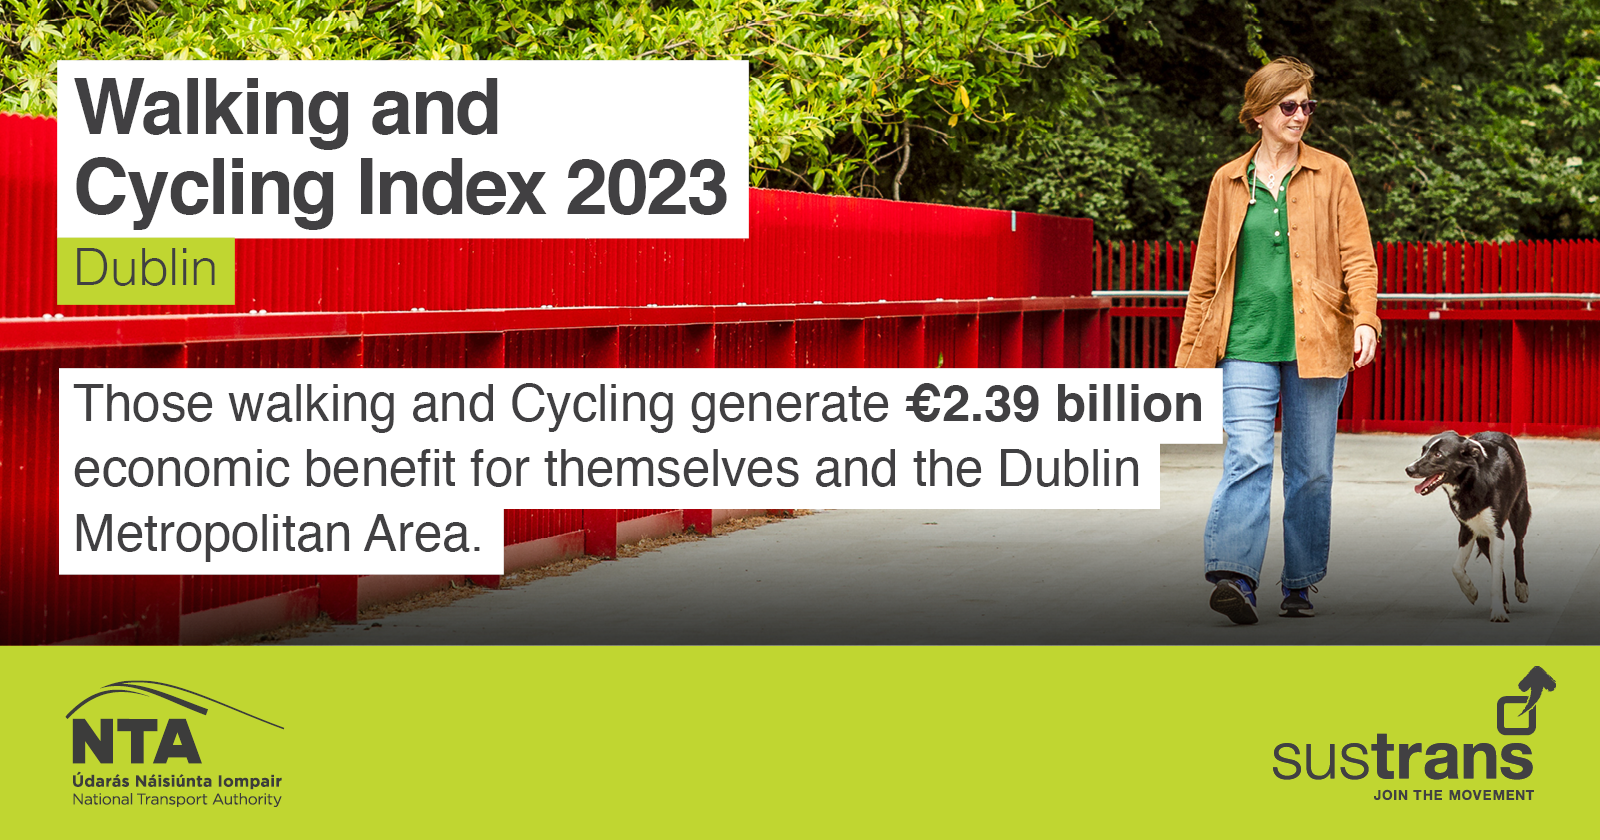 walking and cycling generates 2.39 billion euro economic benefit